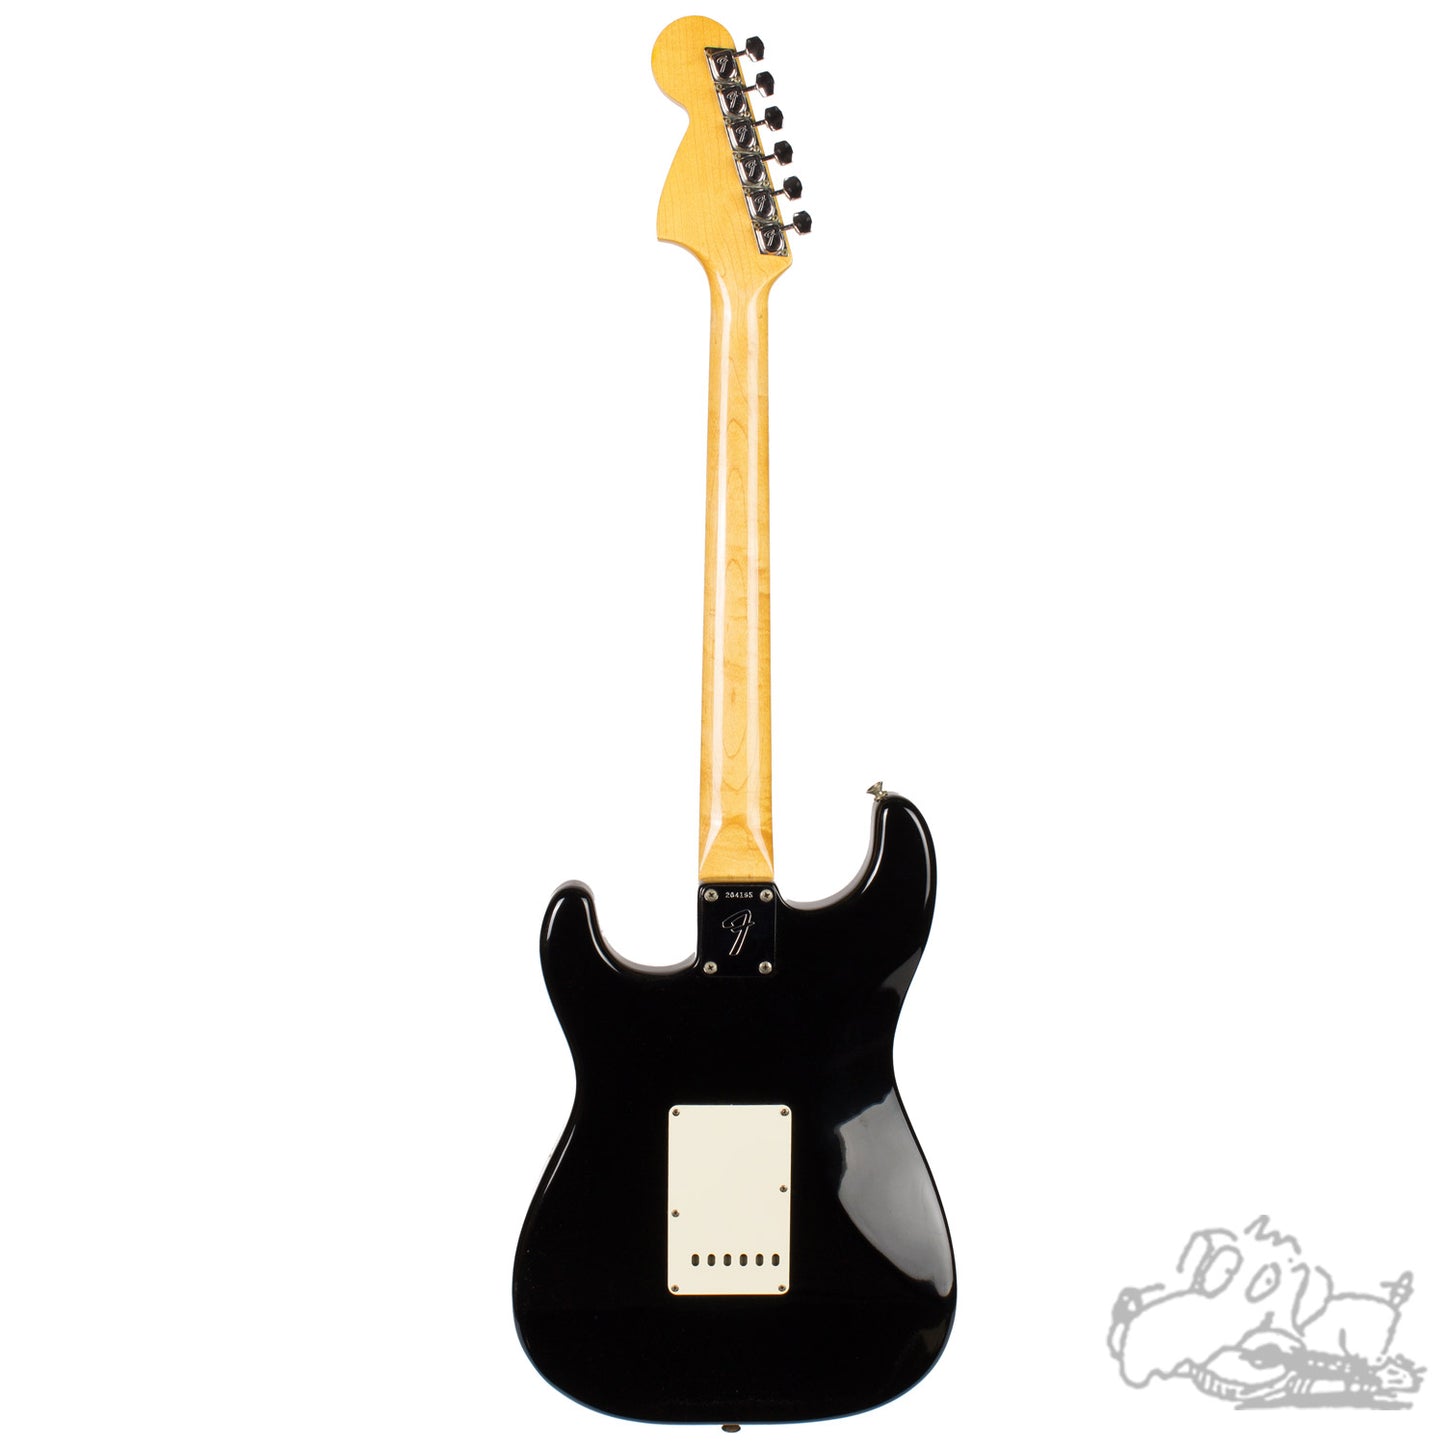 1967 Fender Stratocaster in factory Black finish